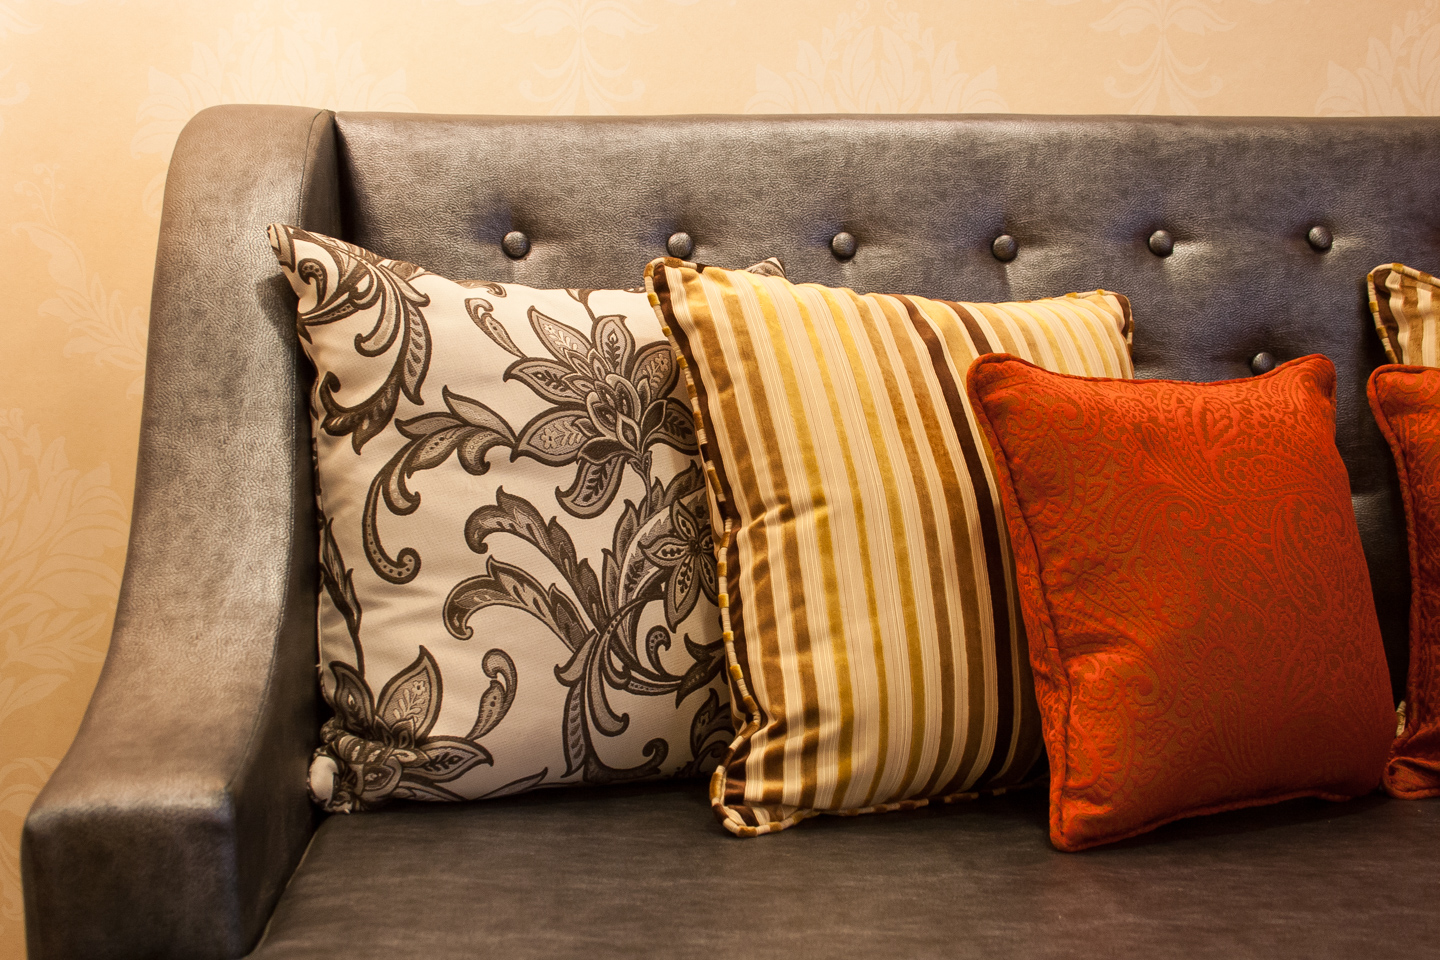 Colourful cushions accent the leather sofa.